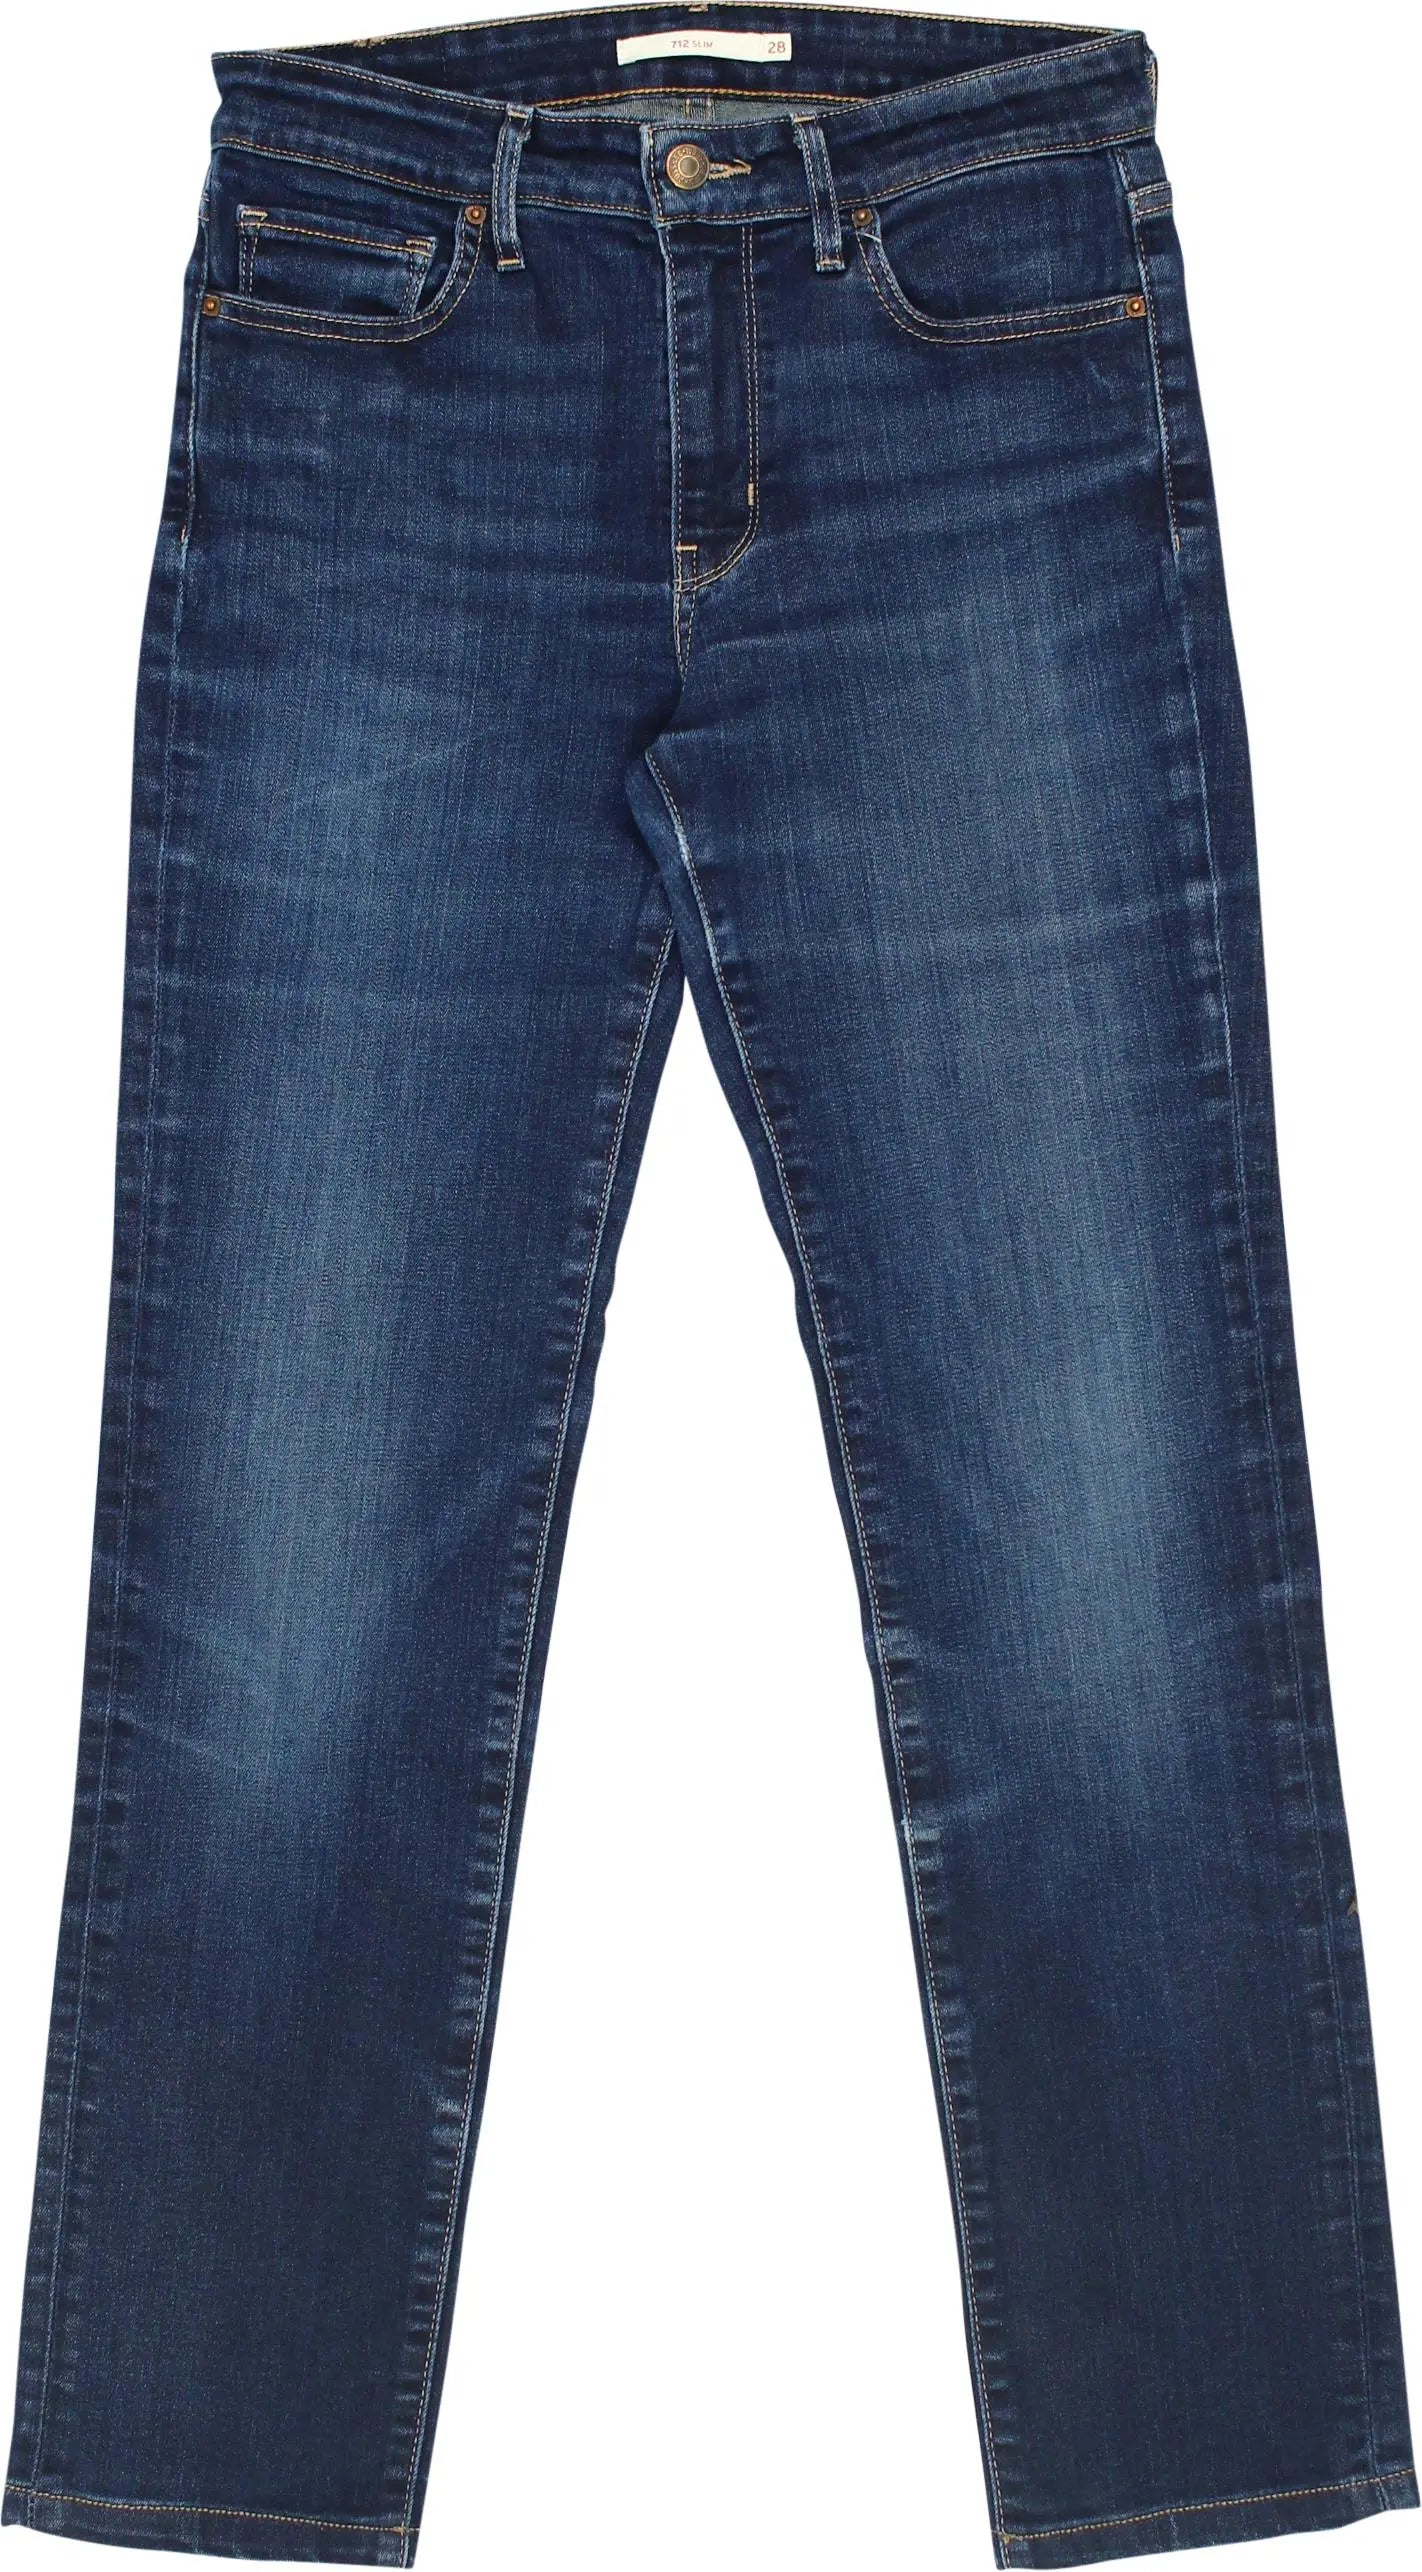 Levi's - Levi's 712 Slim Fit Jeans- ThriftTale.com - Vintage and second handclothing